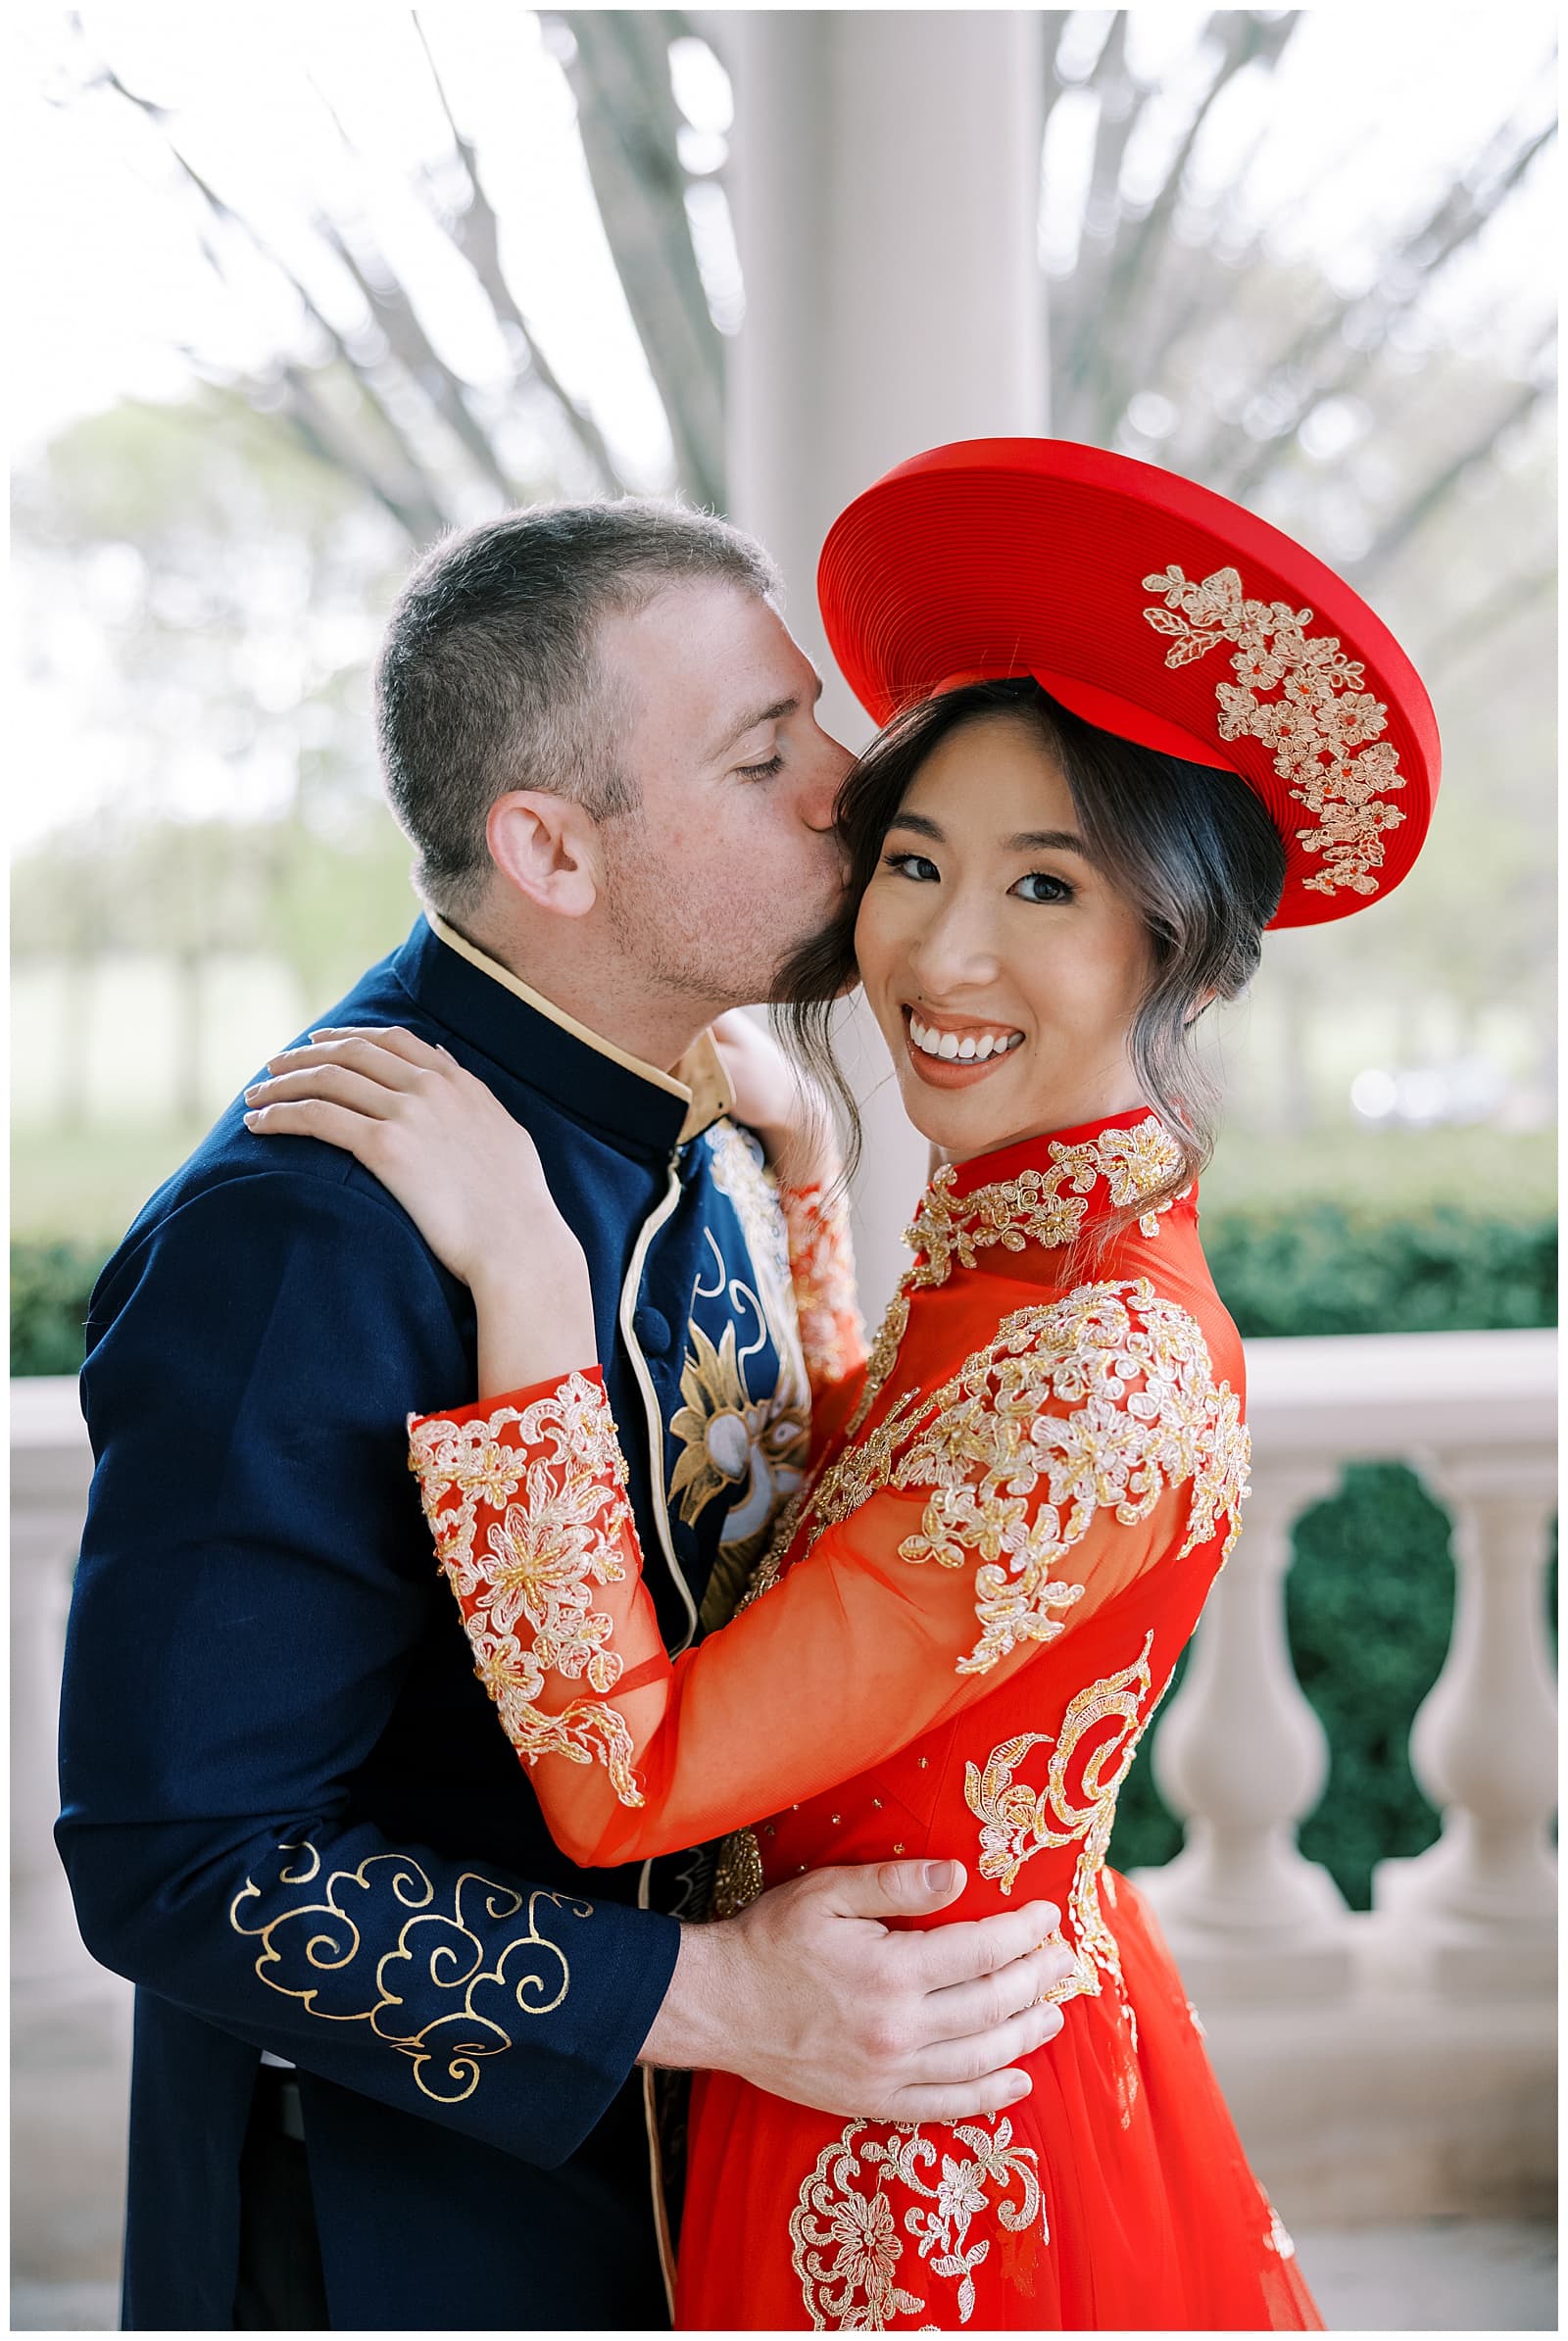 Vietnamese wedding dress: A bridal elegance through the ages